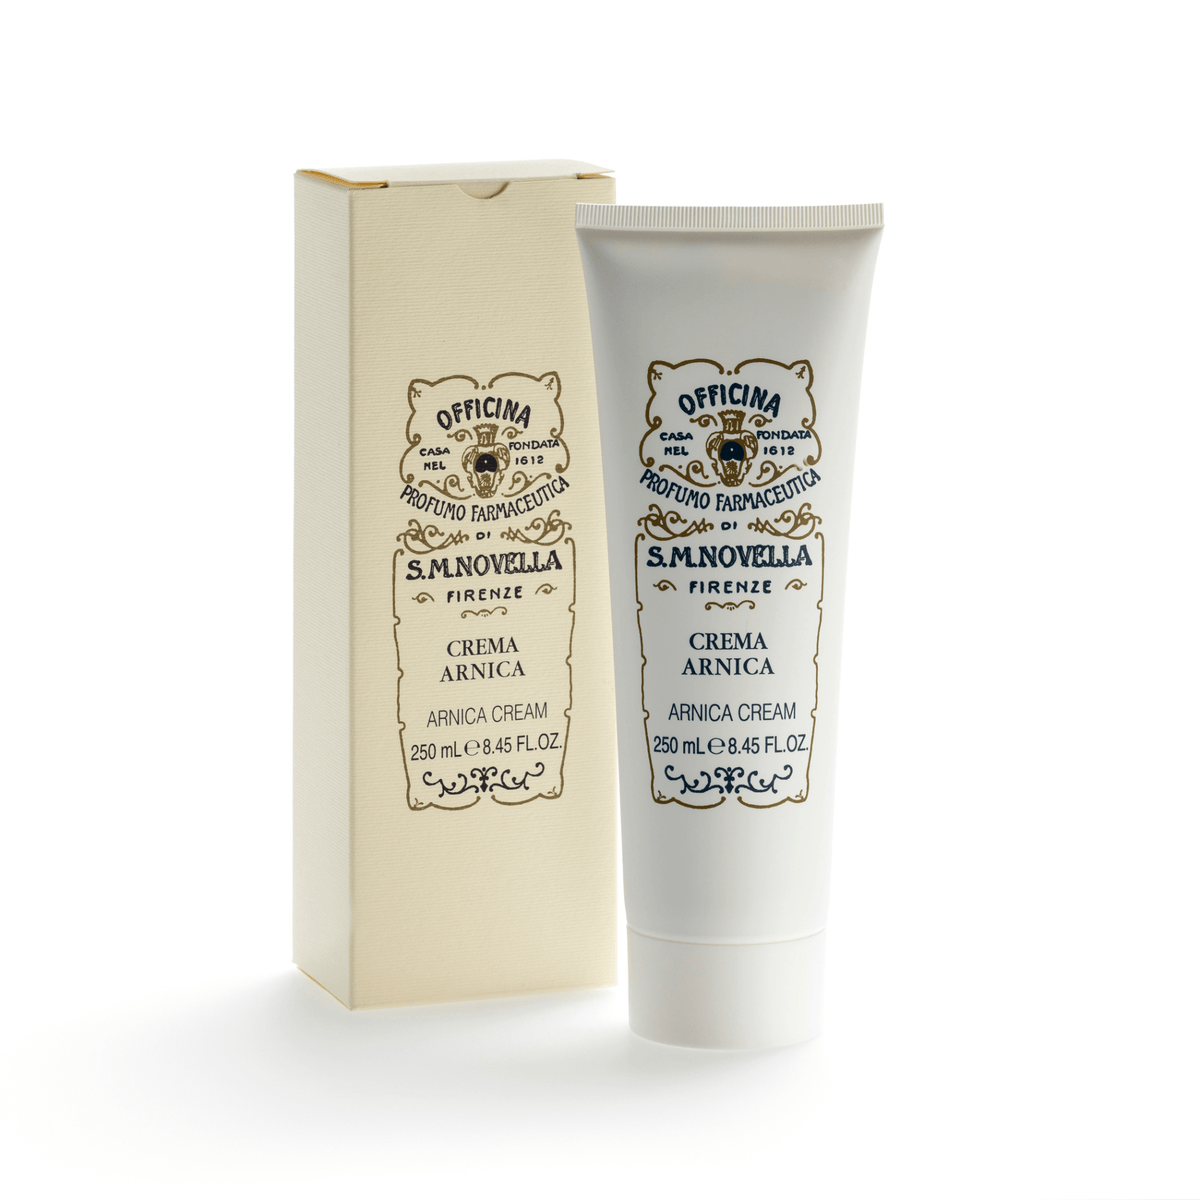 Primary Image of Arnica Cream